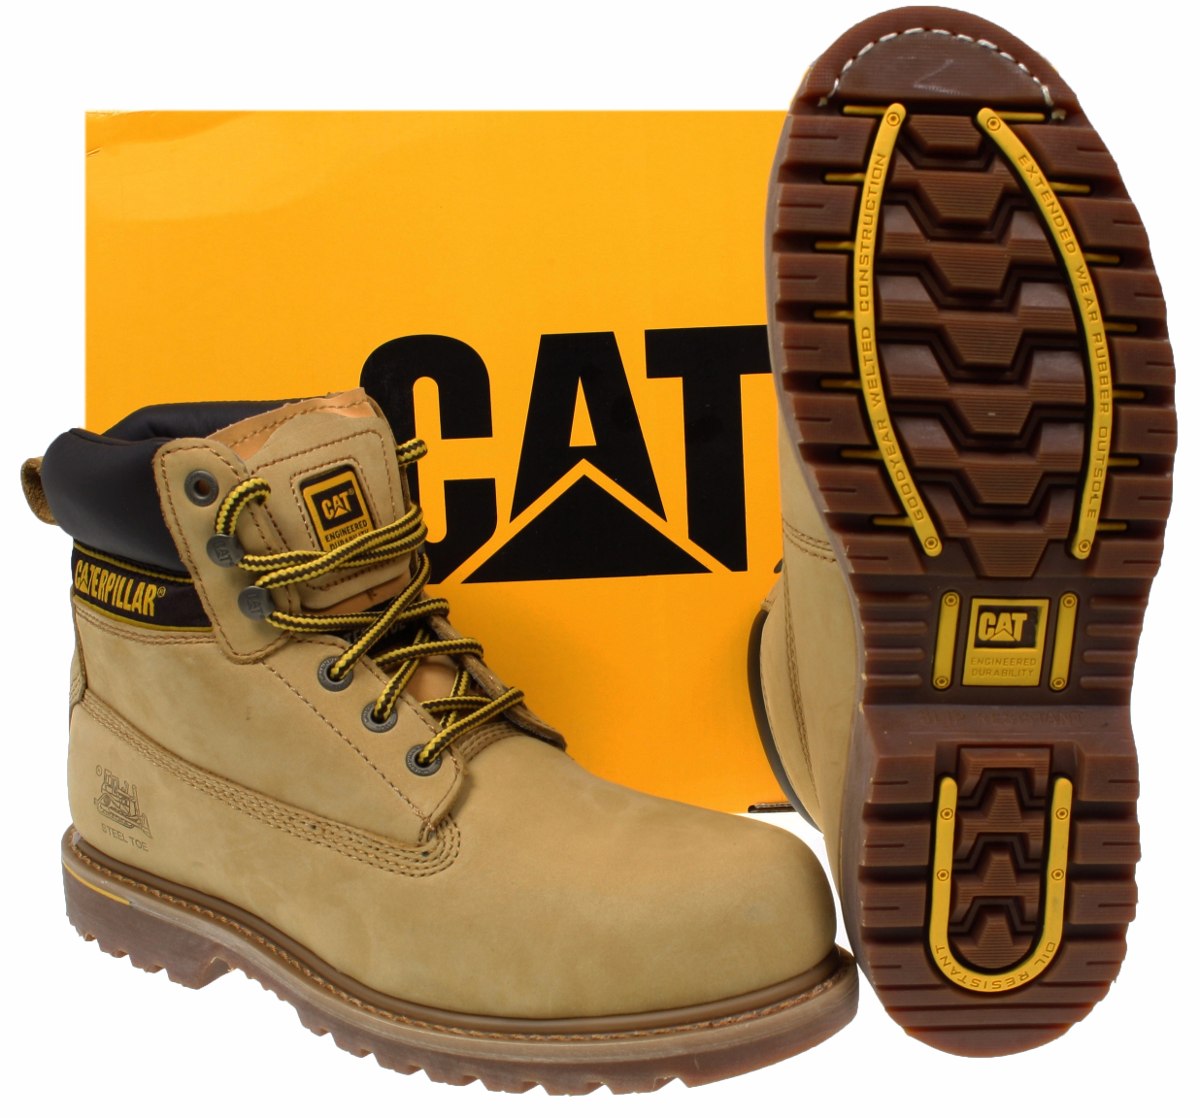 Cat shoes Logos